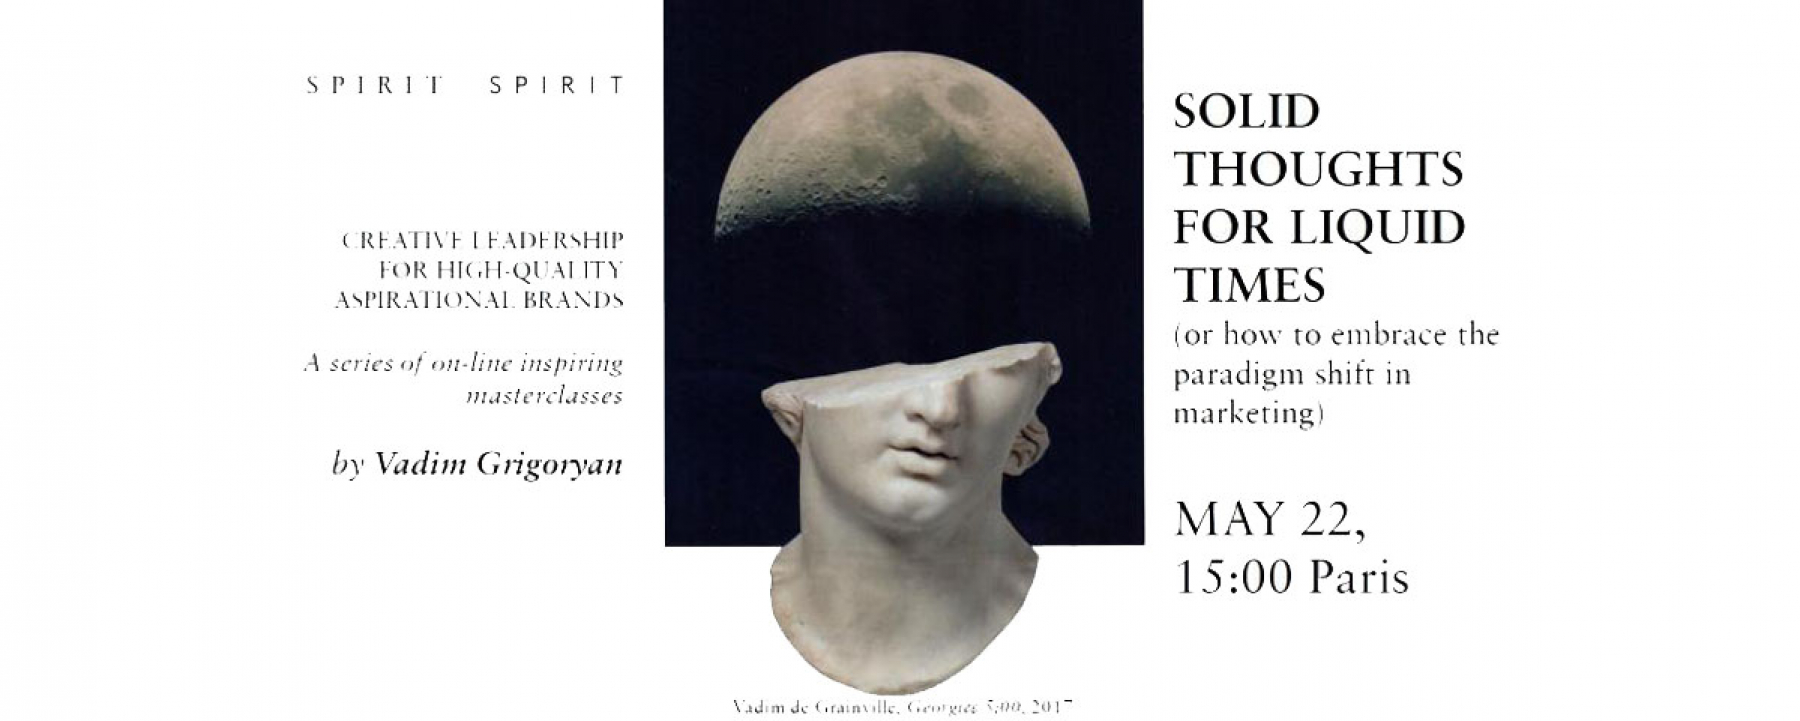 Webinar Solid thoughts for liquid times, le 22 mai 2020, organisé par l'agence Spirit and Spirit 